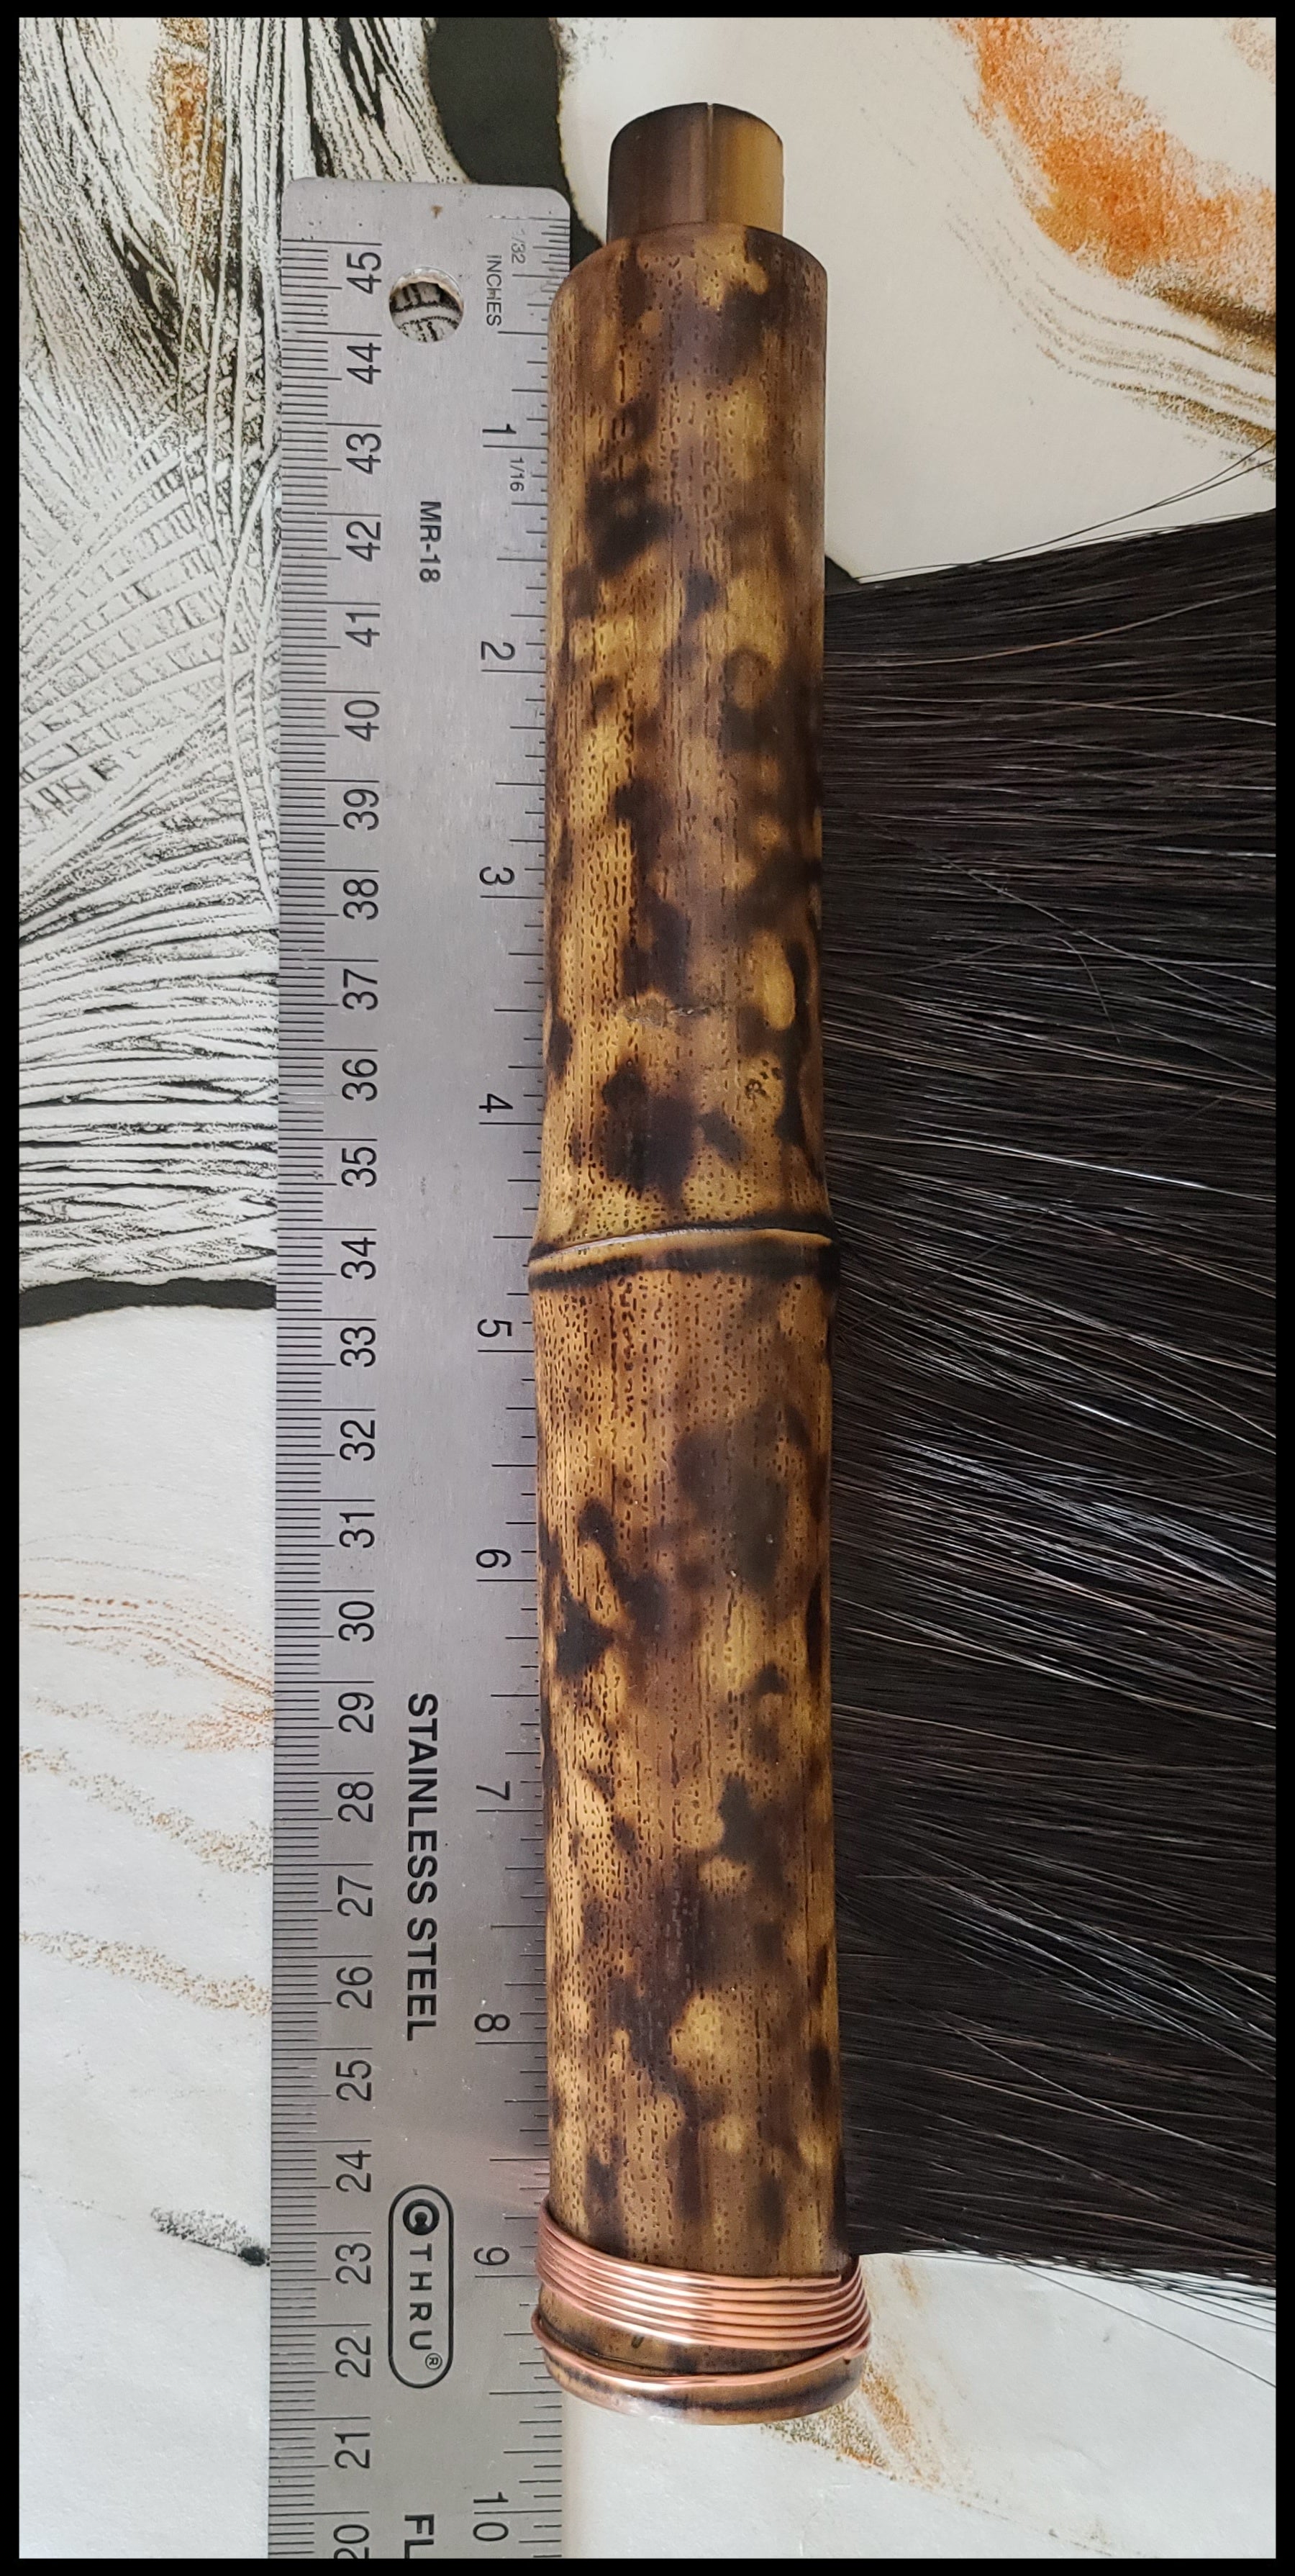 Wide Horsehair Paintbrush with Bamboo Handle WSB #100 Art Supplies Elizabeth Schowachert Art